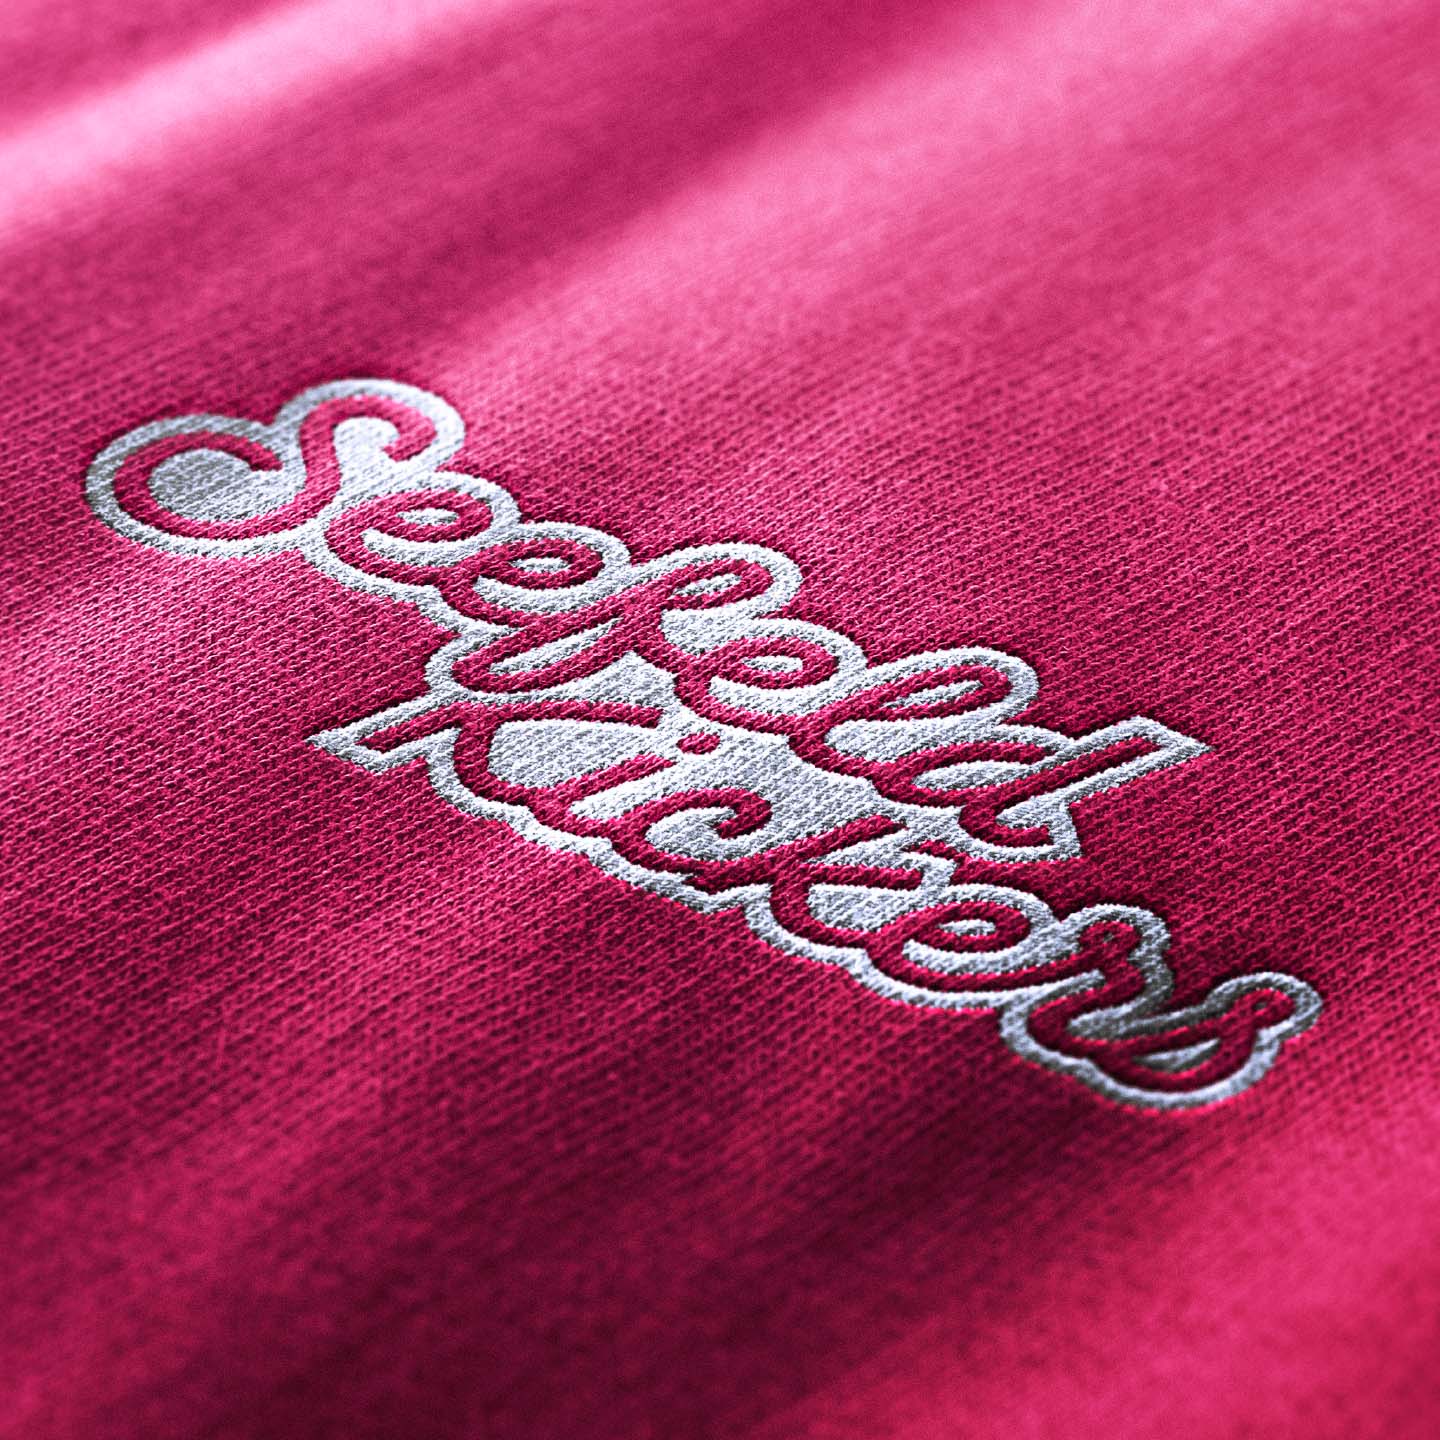 seefeldkickers design embroidered logo